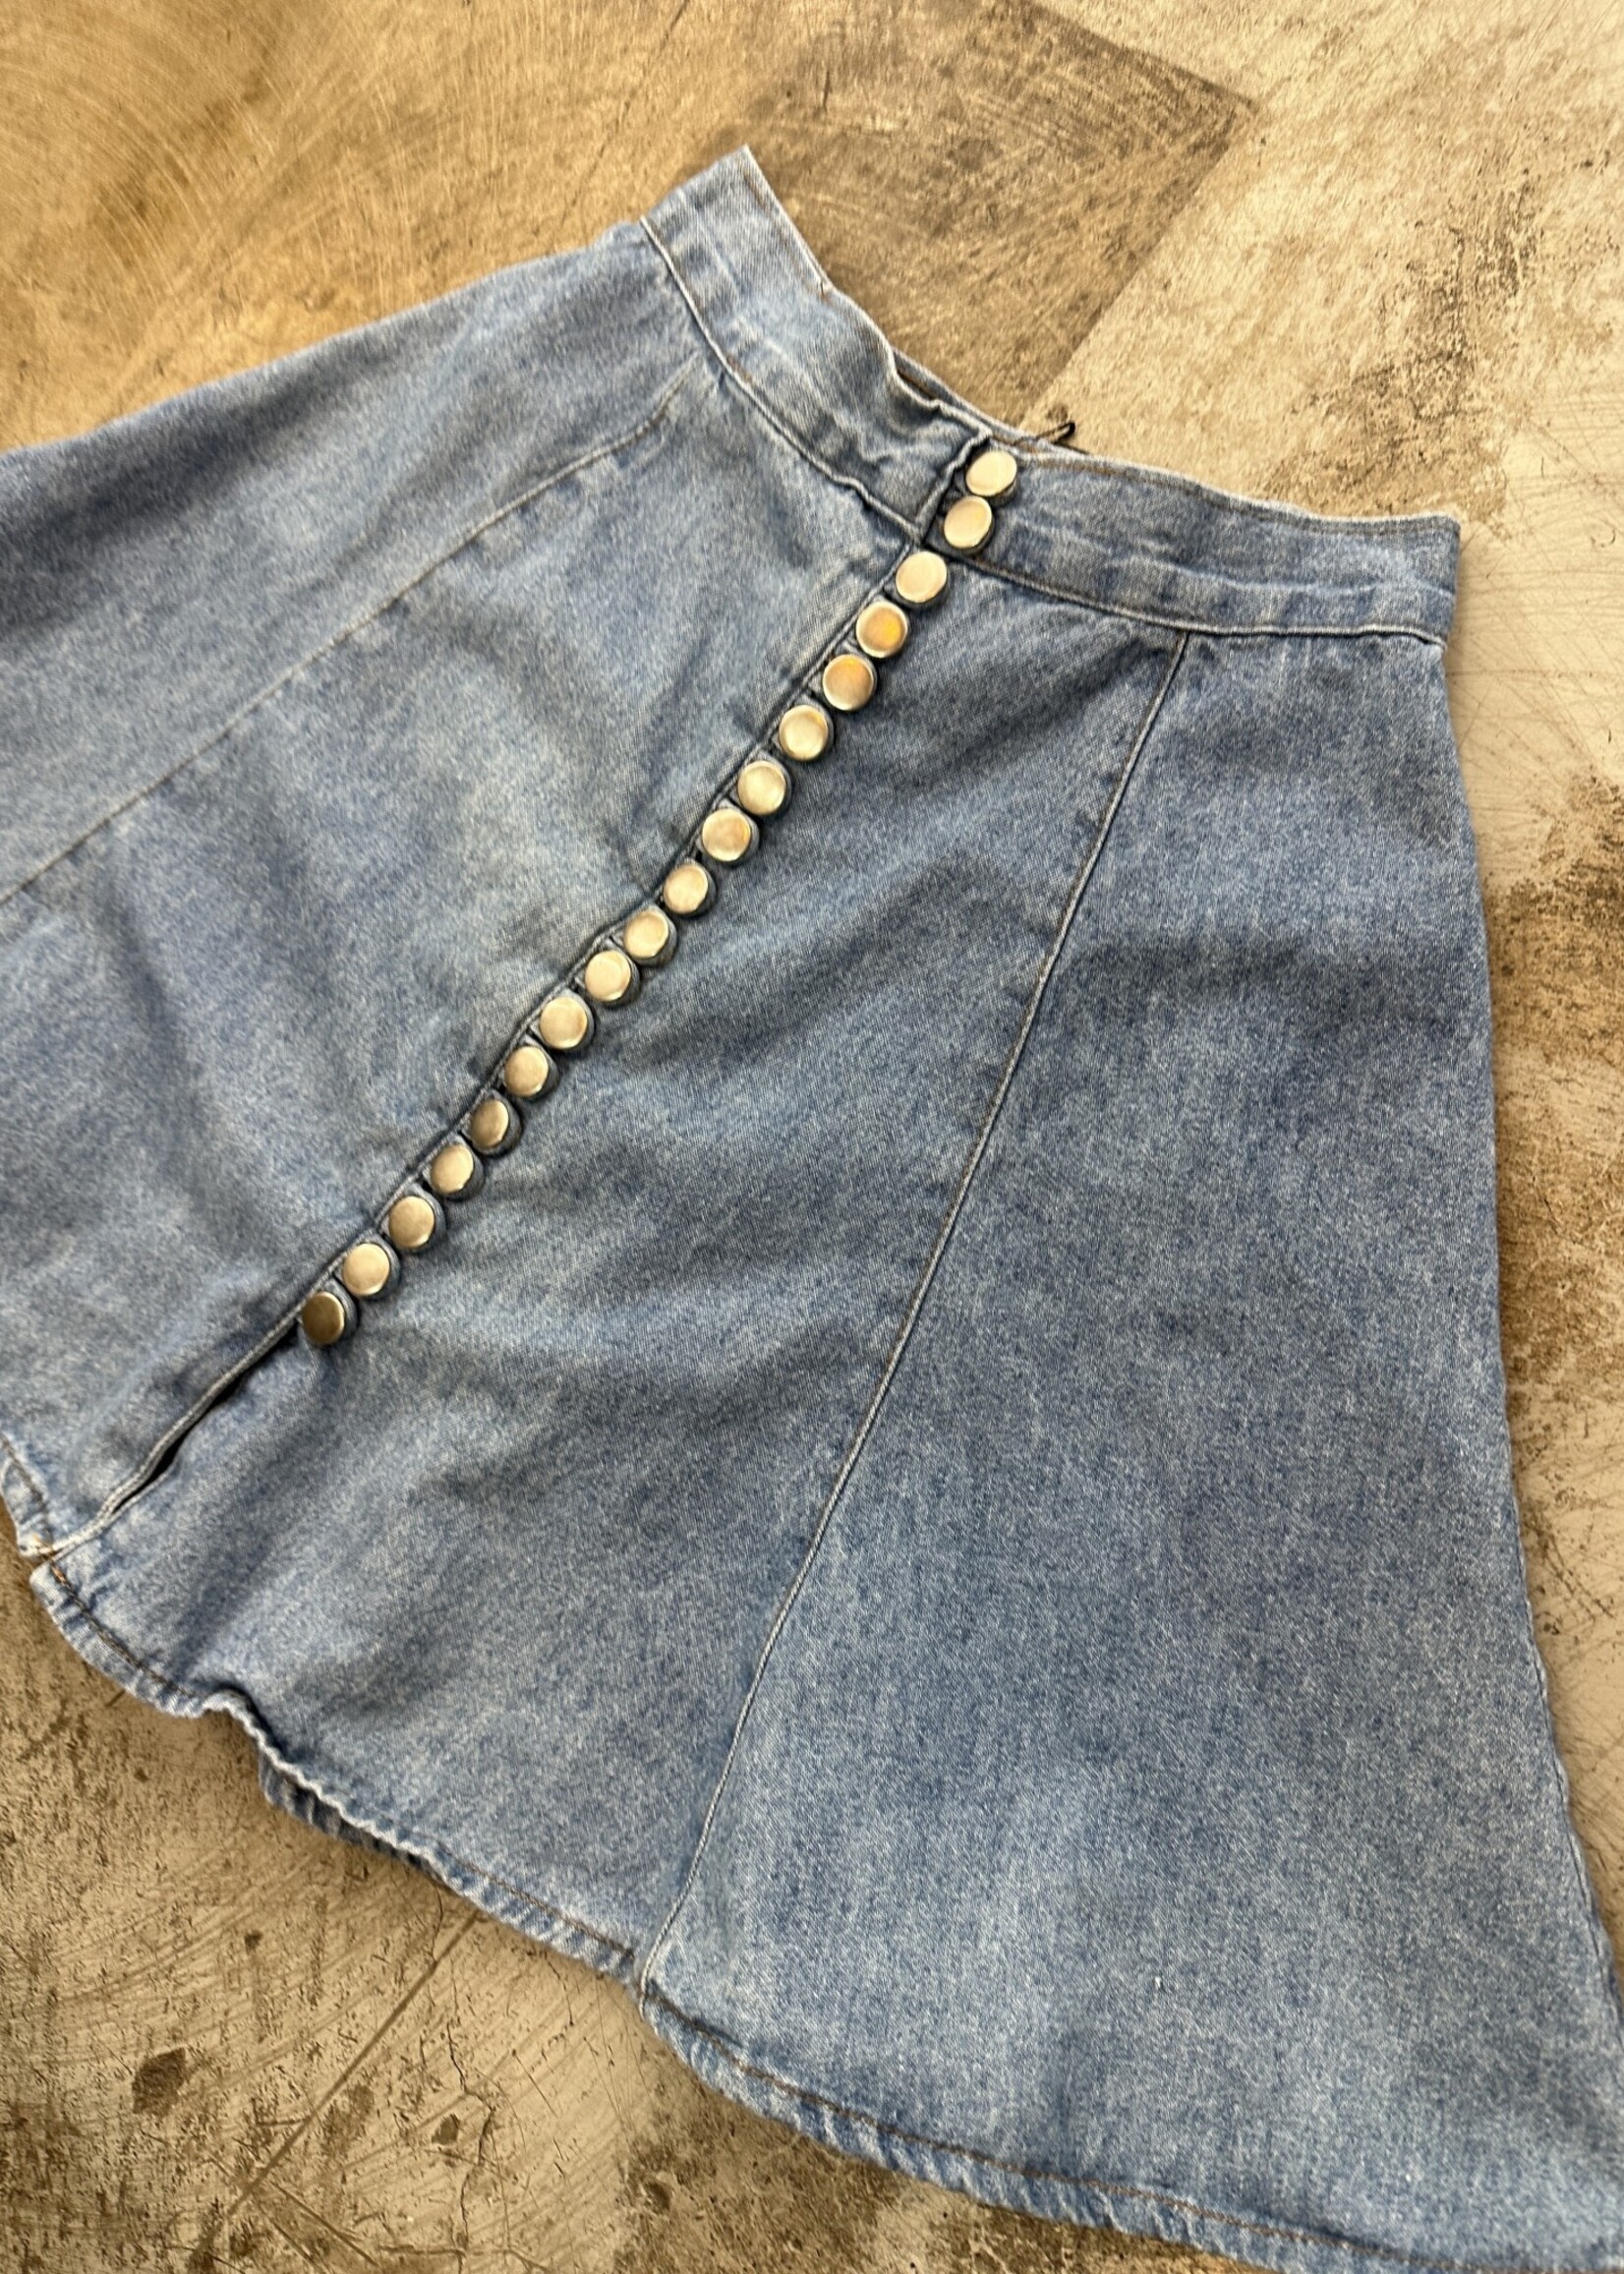 Fredericks Denim Muti-Button Skirt XS 22-23"